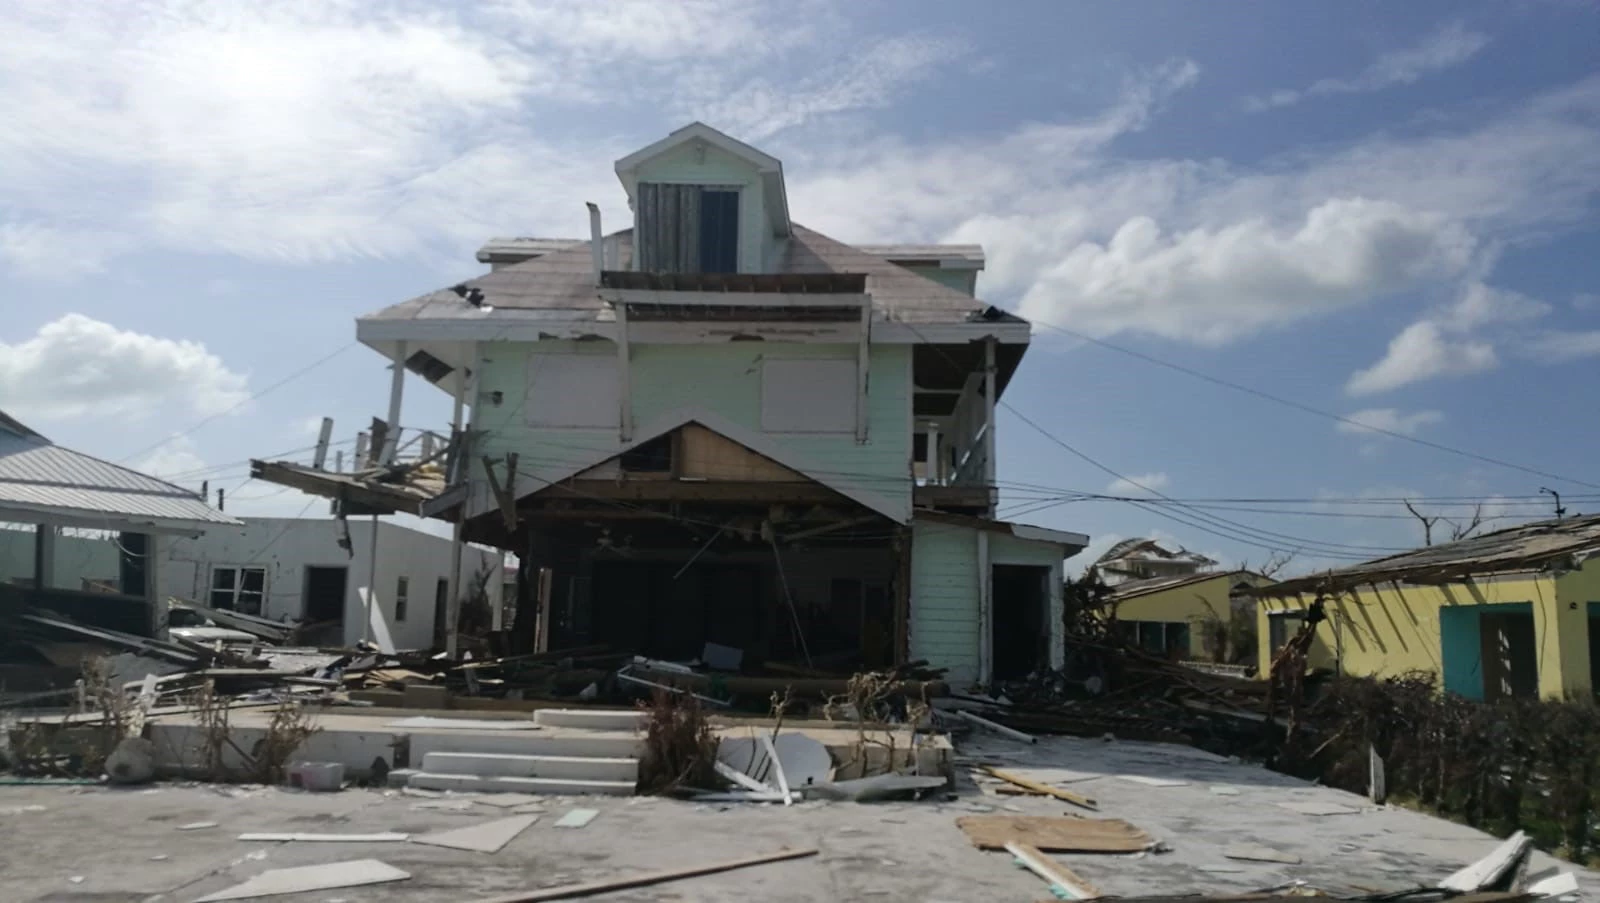 House damaged by the impact of Hurricane Dorian. Photo: World Bank